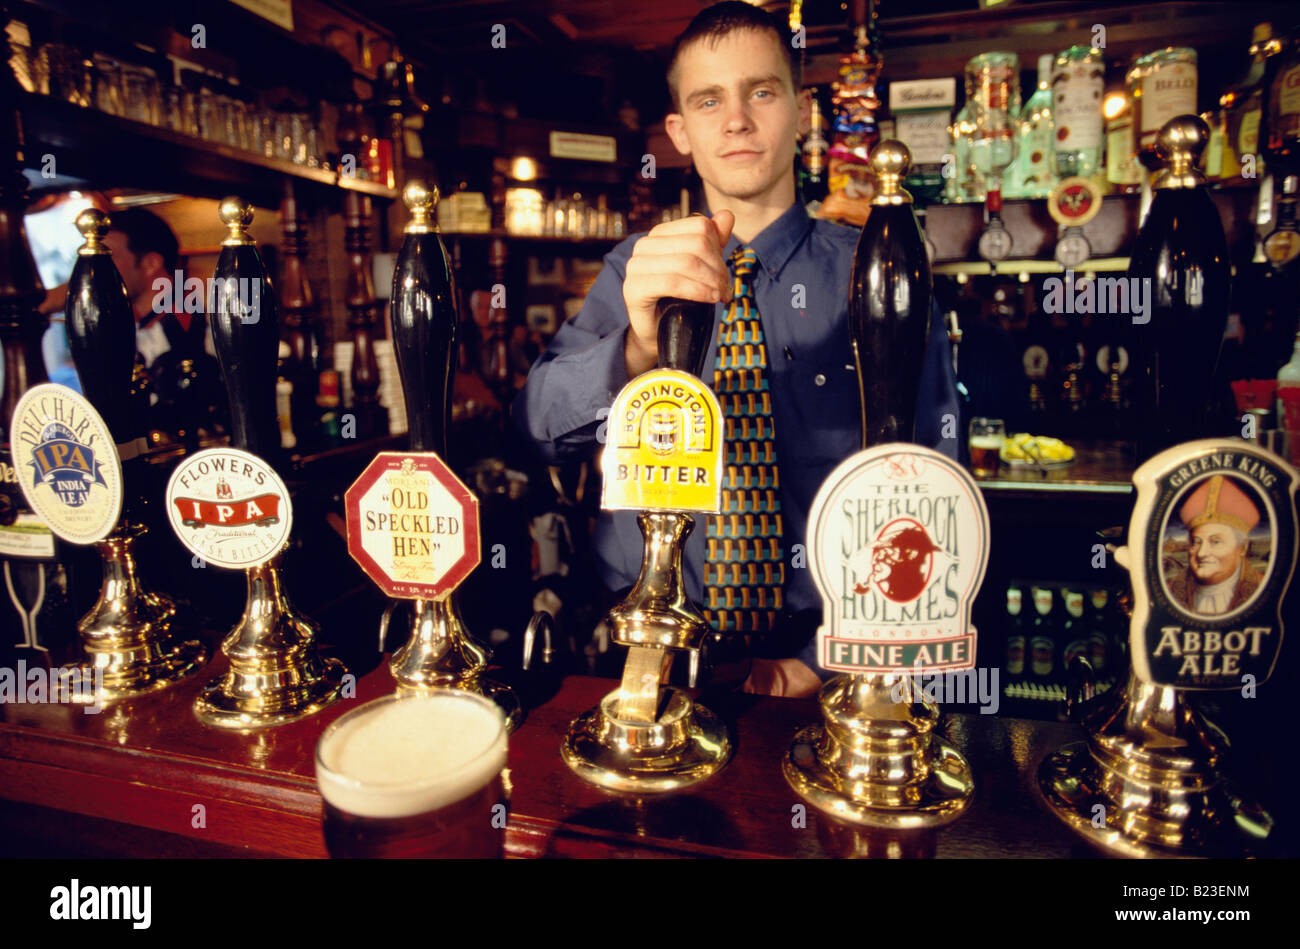 Beer on tap barman at The Sherlock Holmes Pub London Stock Photo